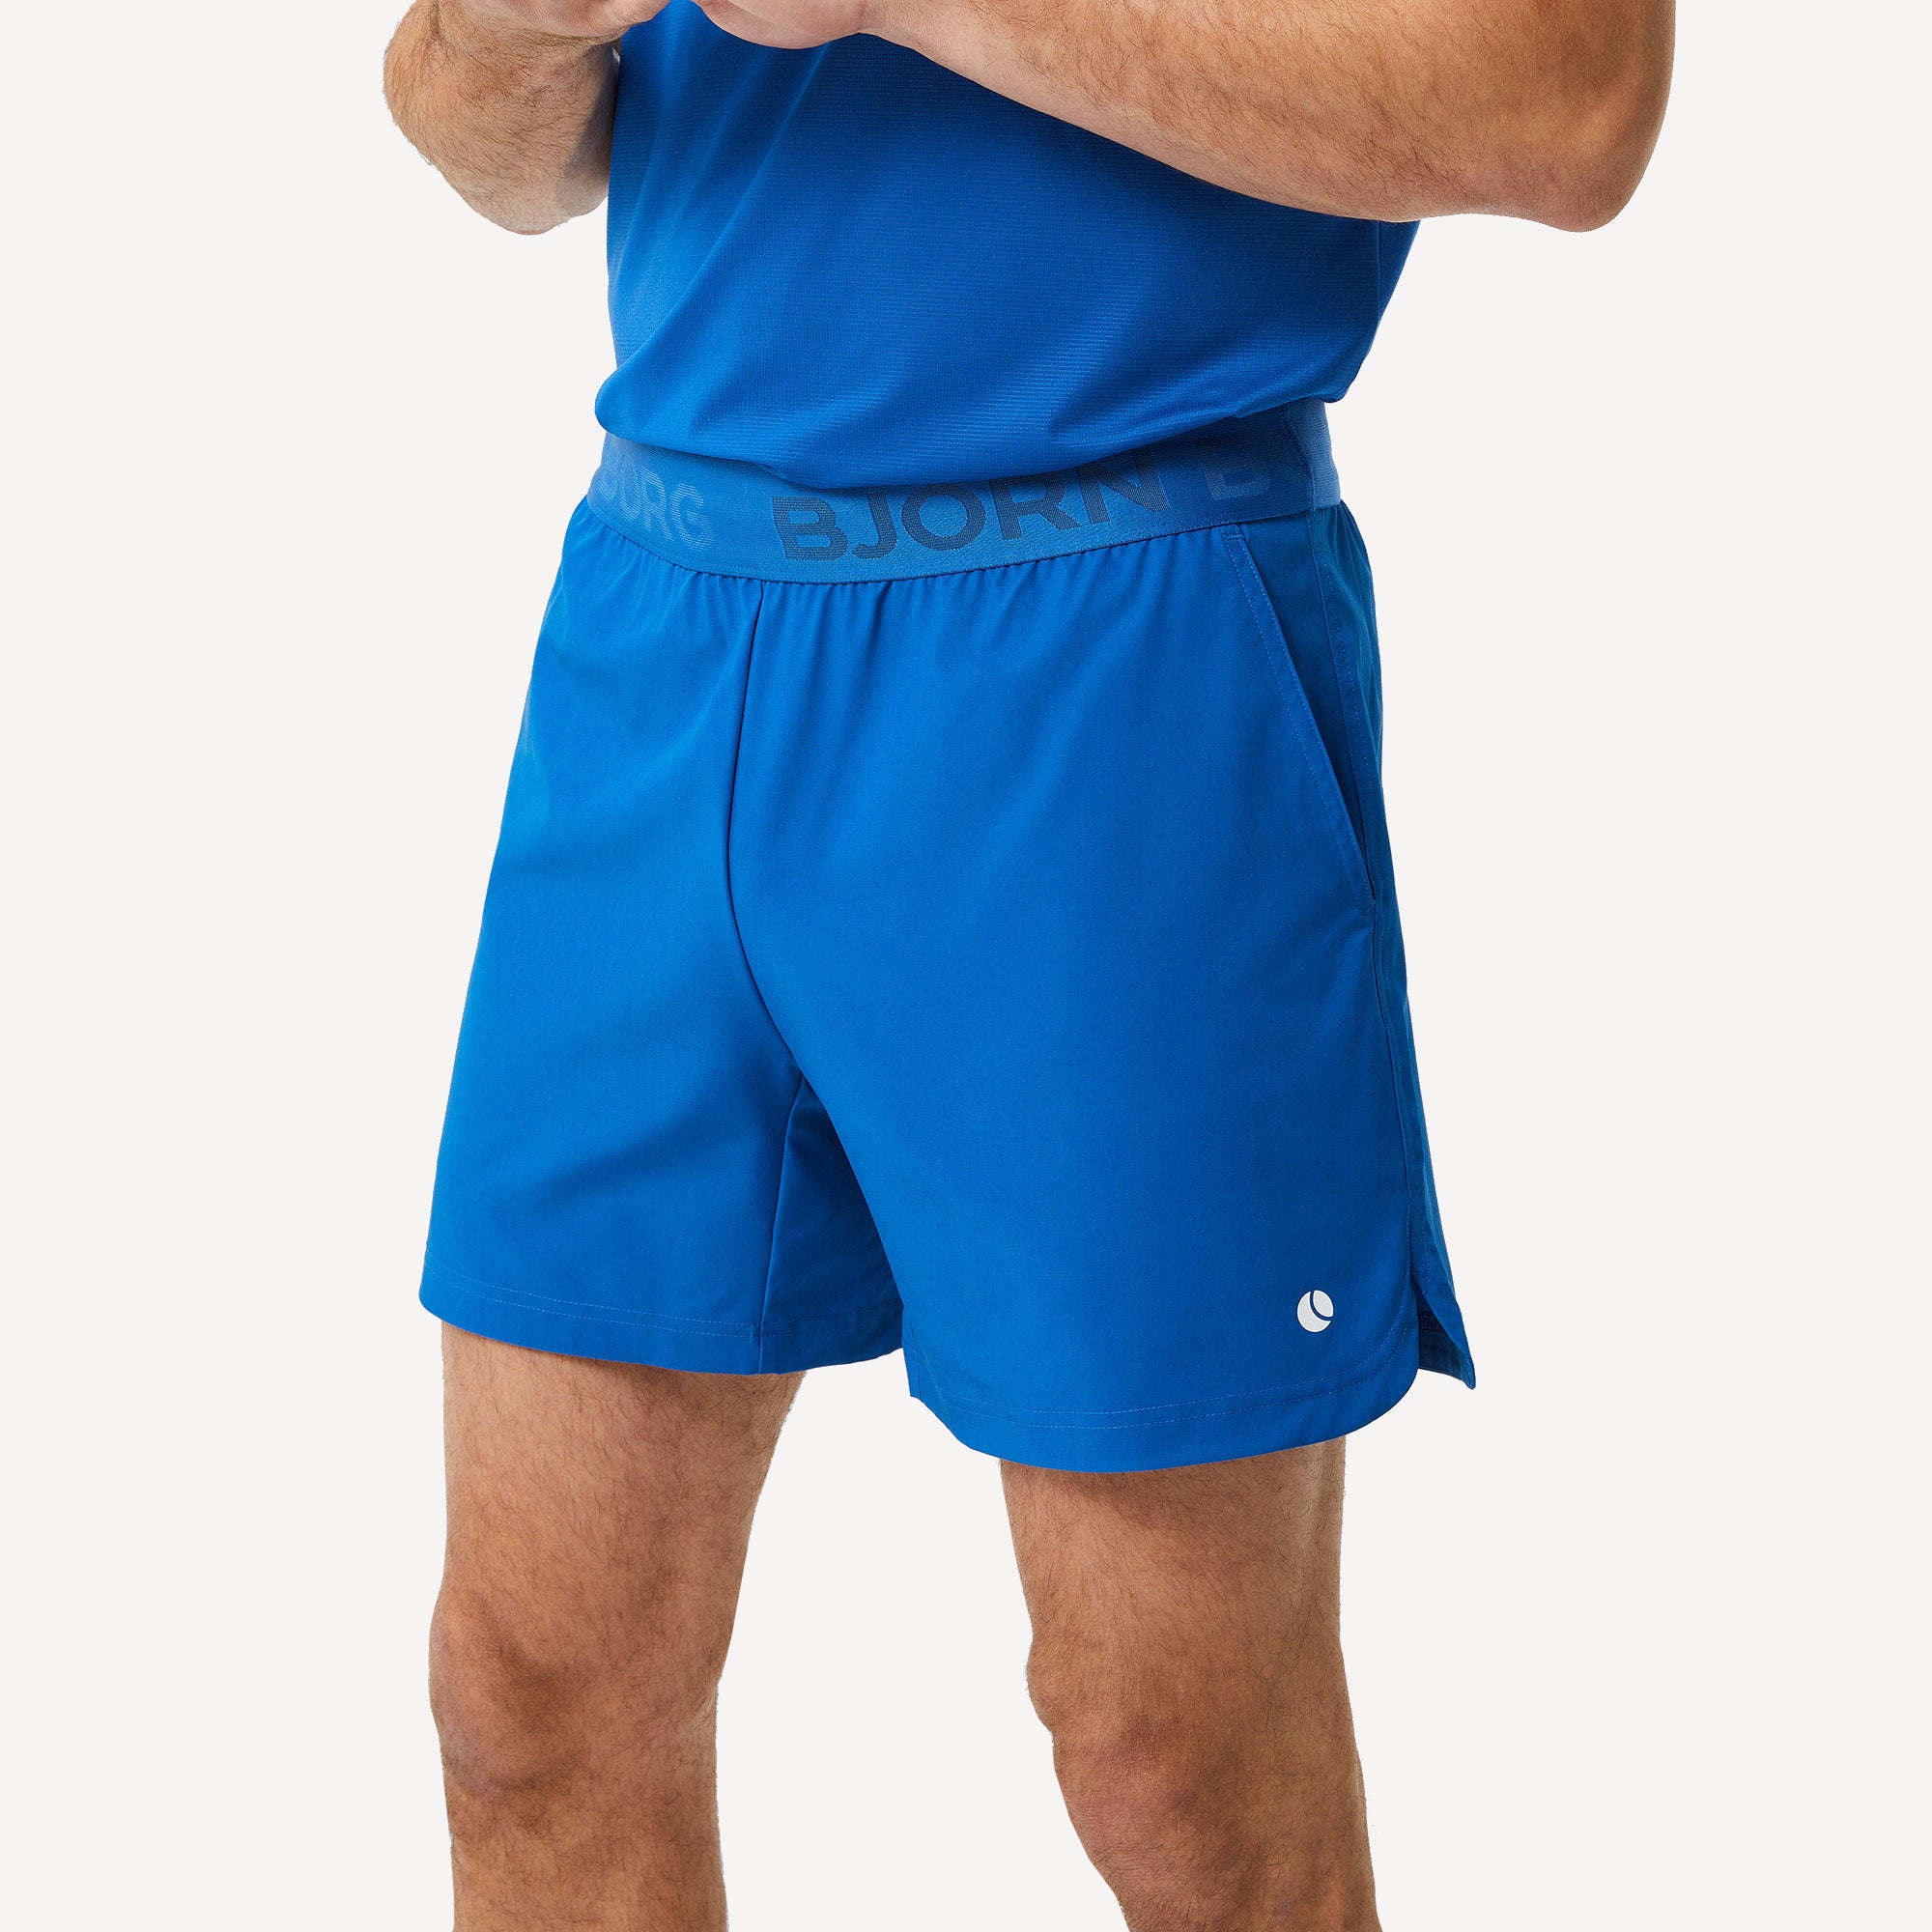 Björn Borg Ace Men's Short Tennis Shorts - Blue (1)